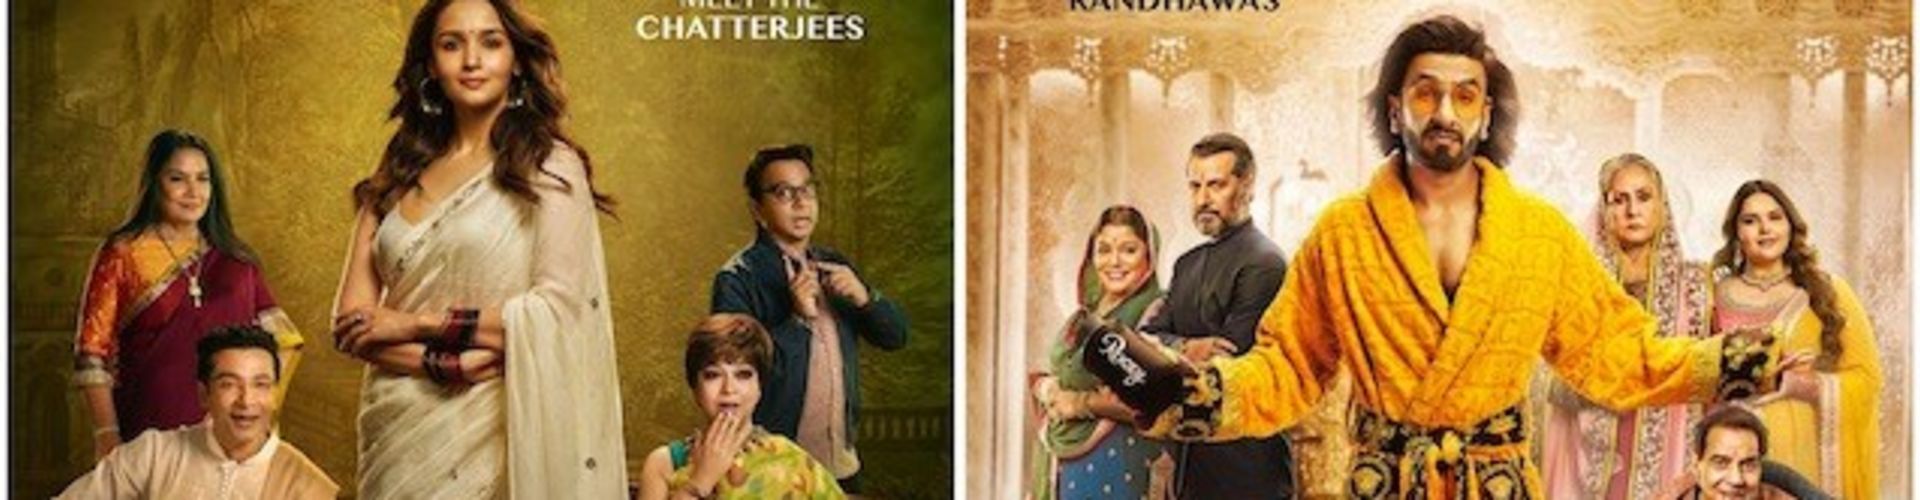 Meet Randhawa’s And Chatterjee’s Of Rocky Aur Rani Ki Prem Kahaani